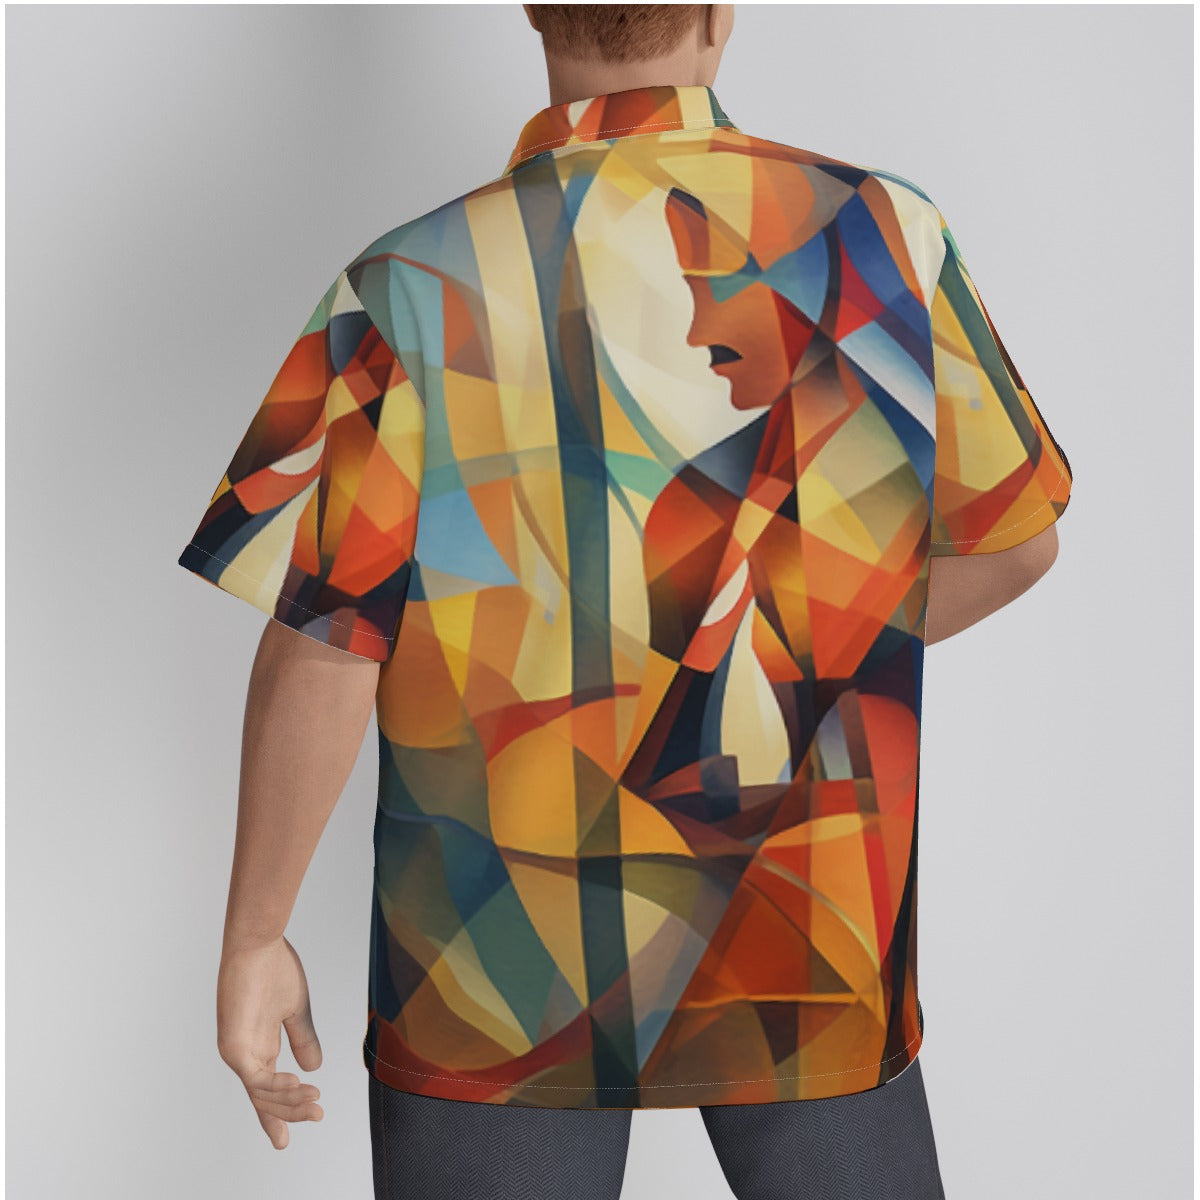 3QYNJ All-Over Print Men's Hawaiian Shirt With Button Closure |115GSM Cotton poplin